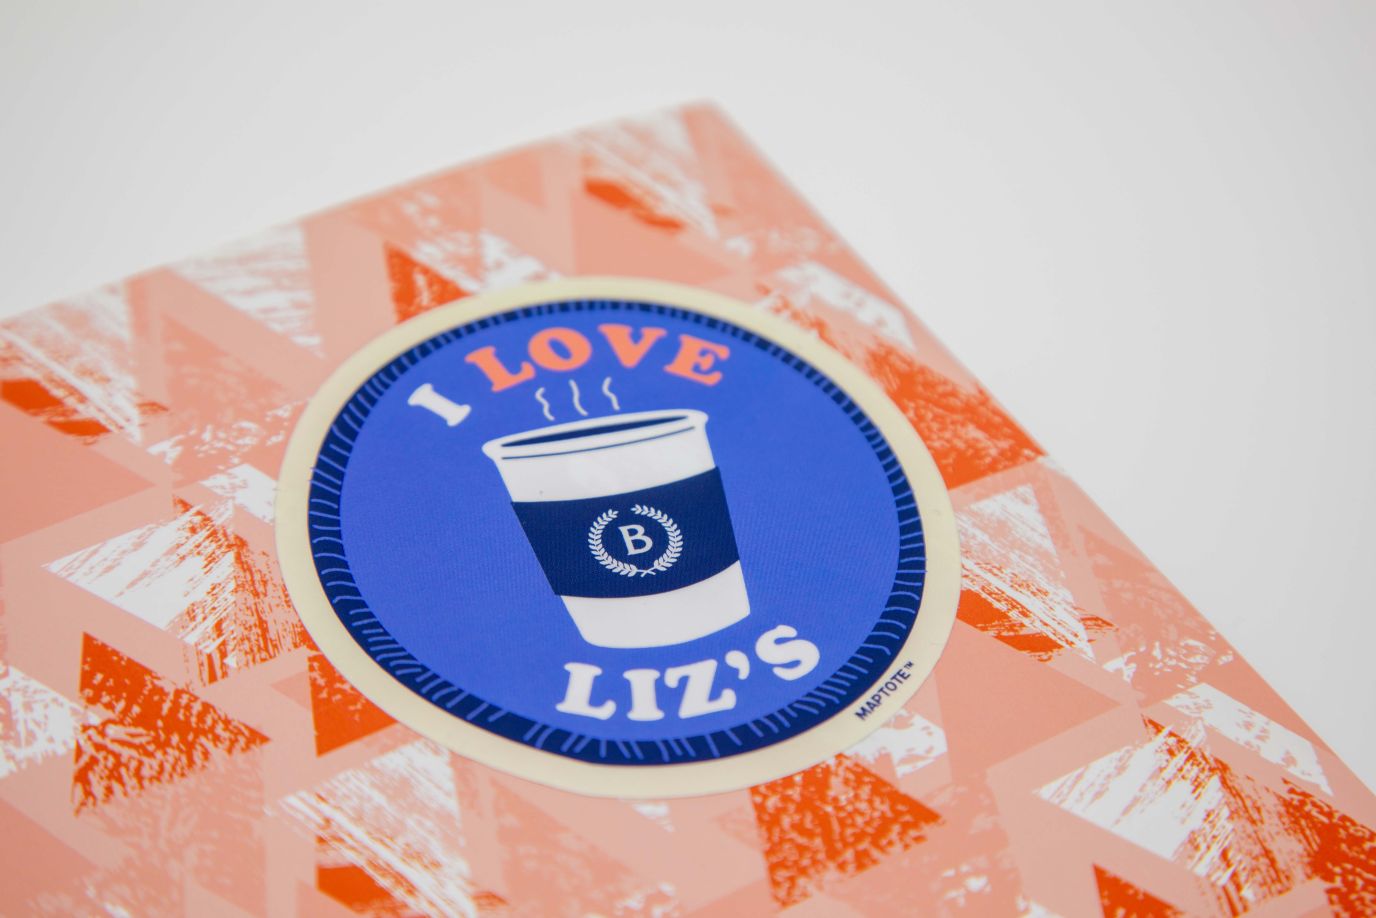 Maptote Sticker - Liz's Cafe